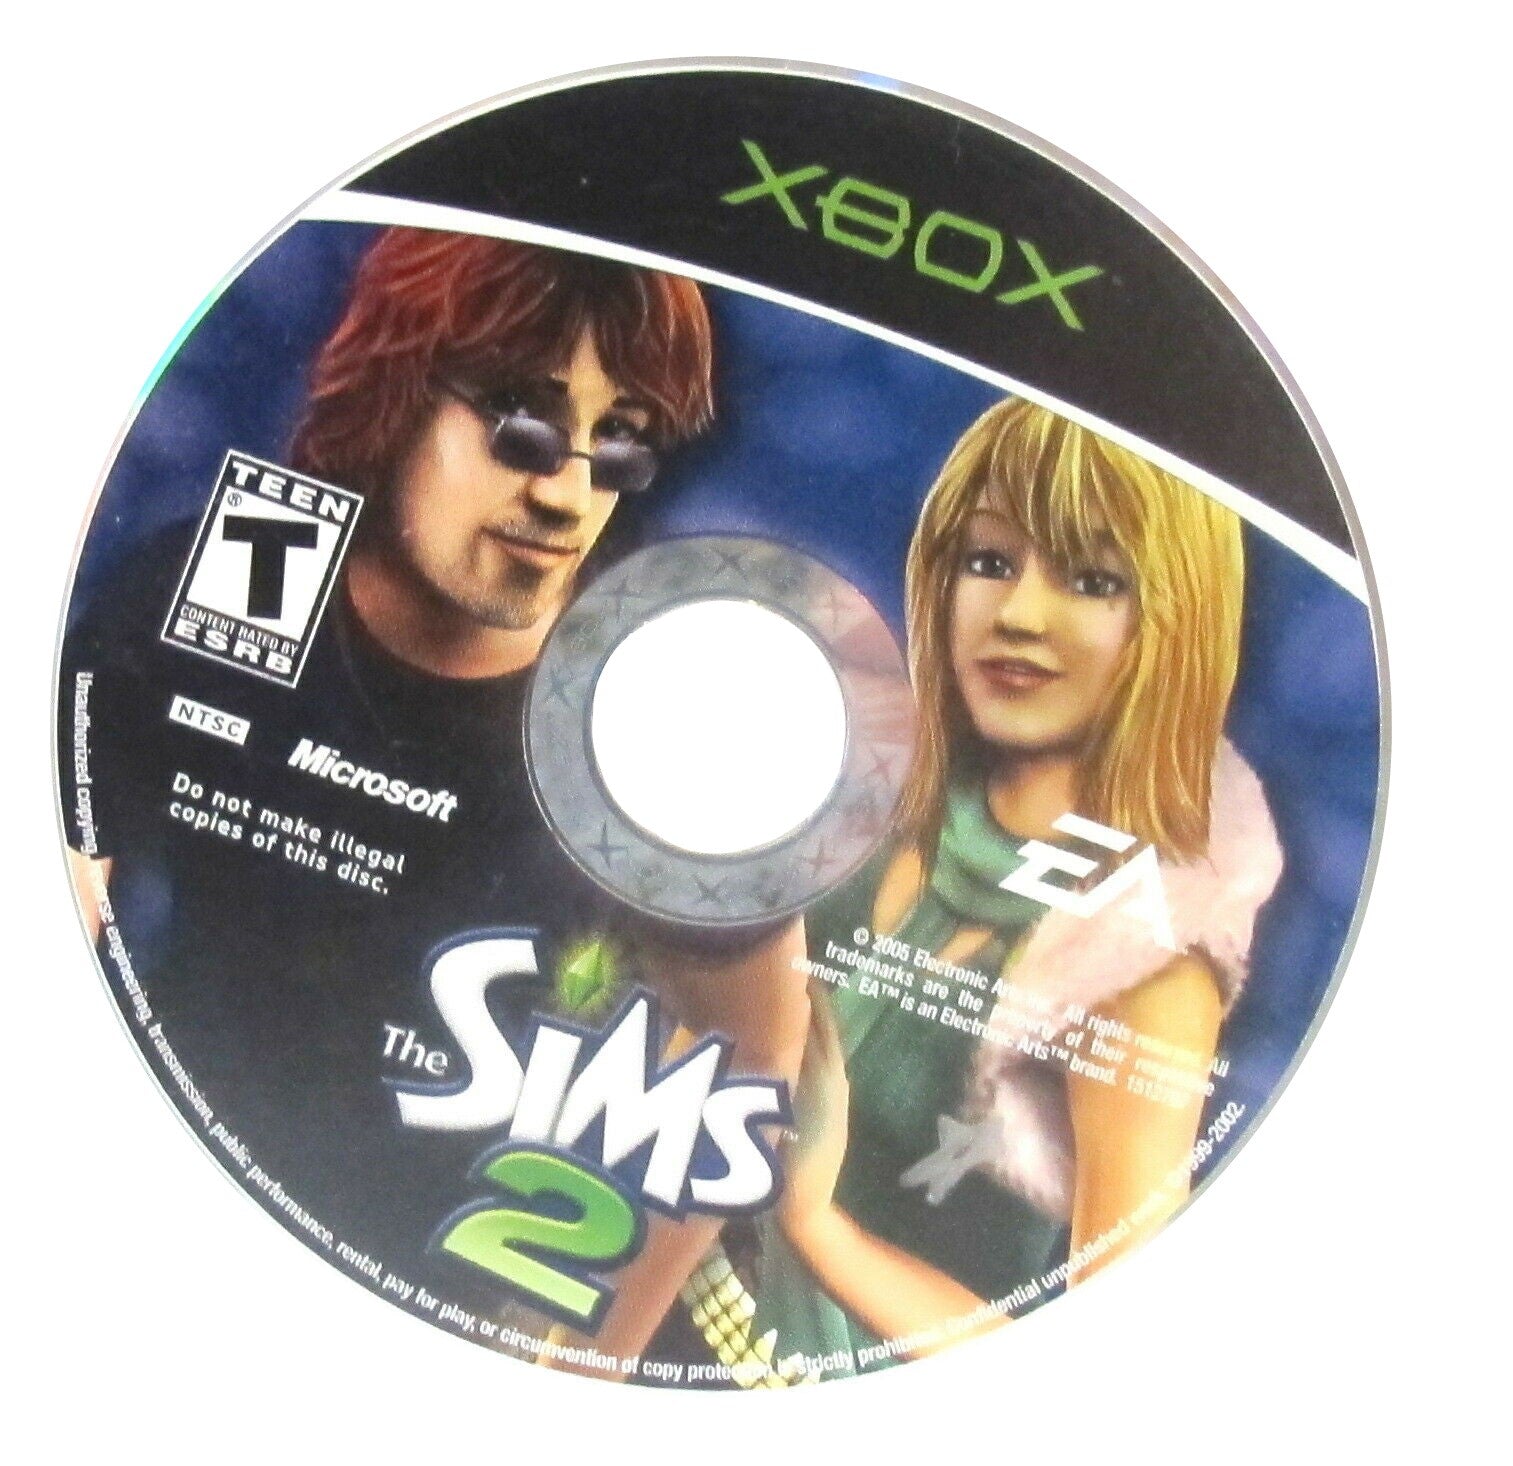 The Sims 2 - Microsoft Xbox Game